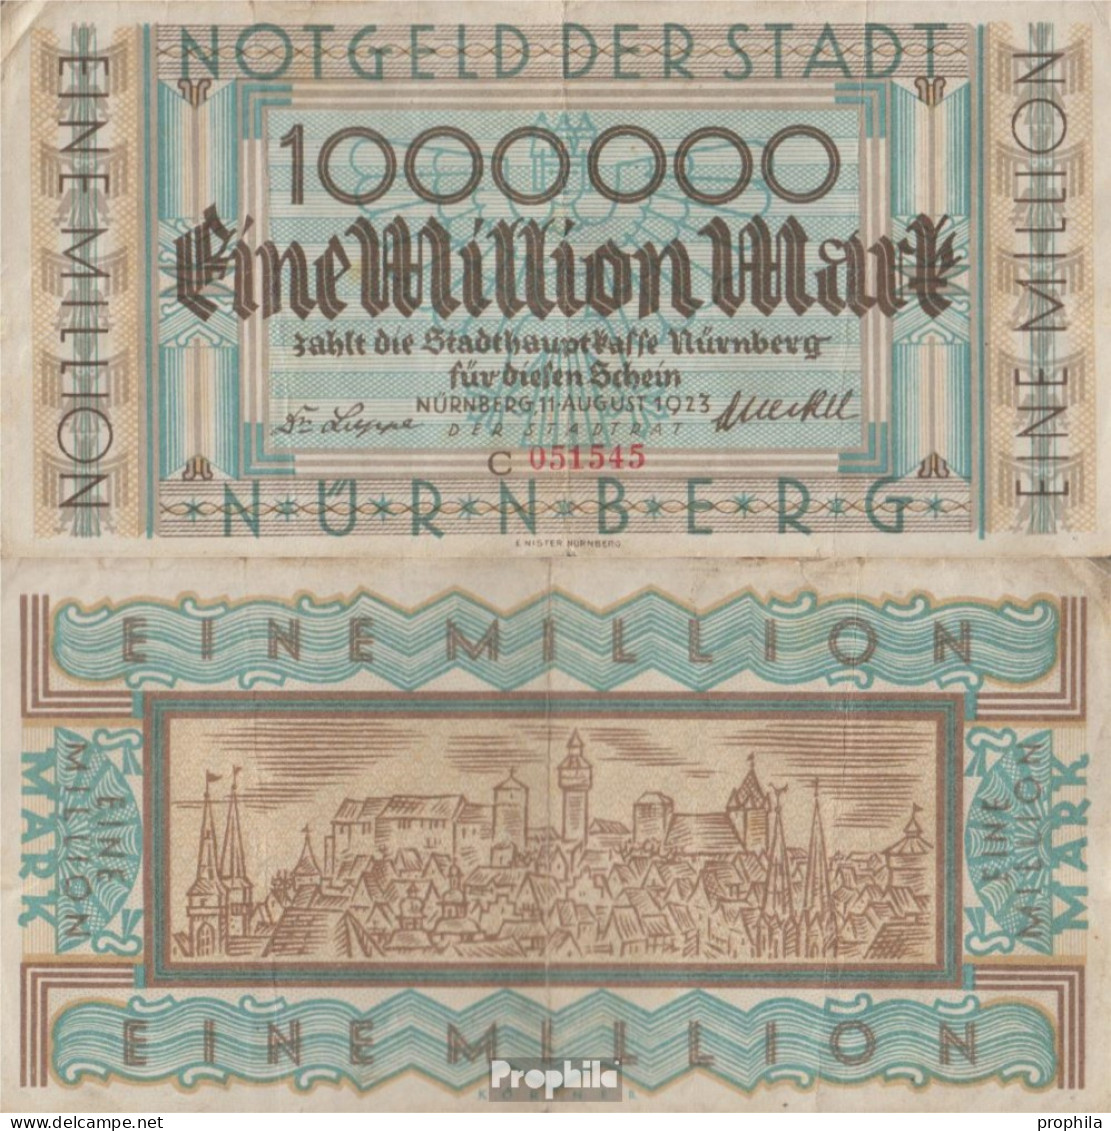 Nürnberg Inflationsgeld Stadt Nürnberg Gebraucht (III) 1923 1 Million Mark - 1 Million Mark